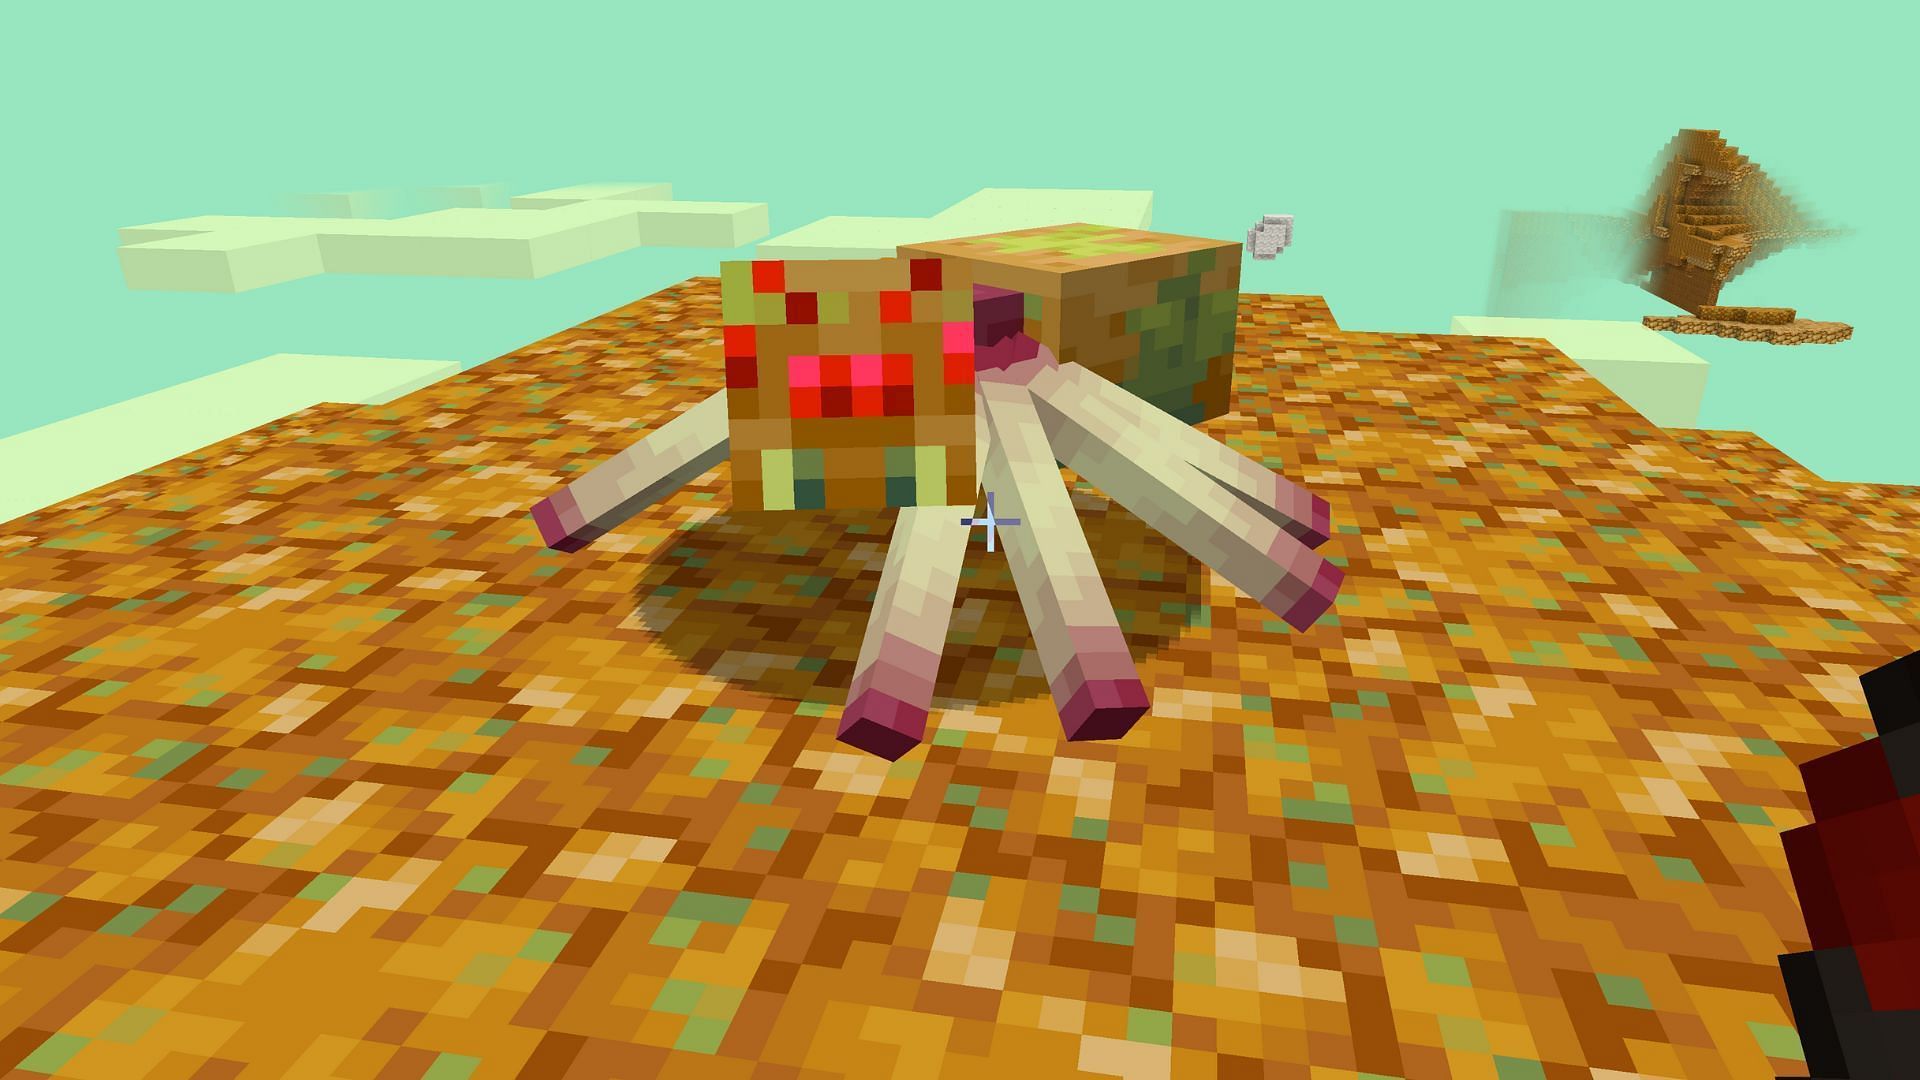 The Spider in Potato dimension (Image via Mojang Studios)